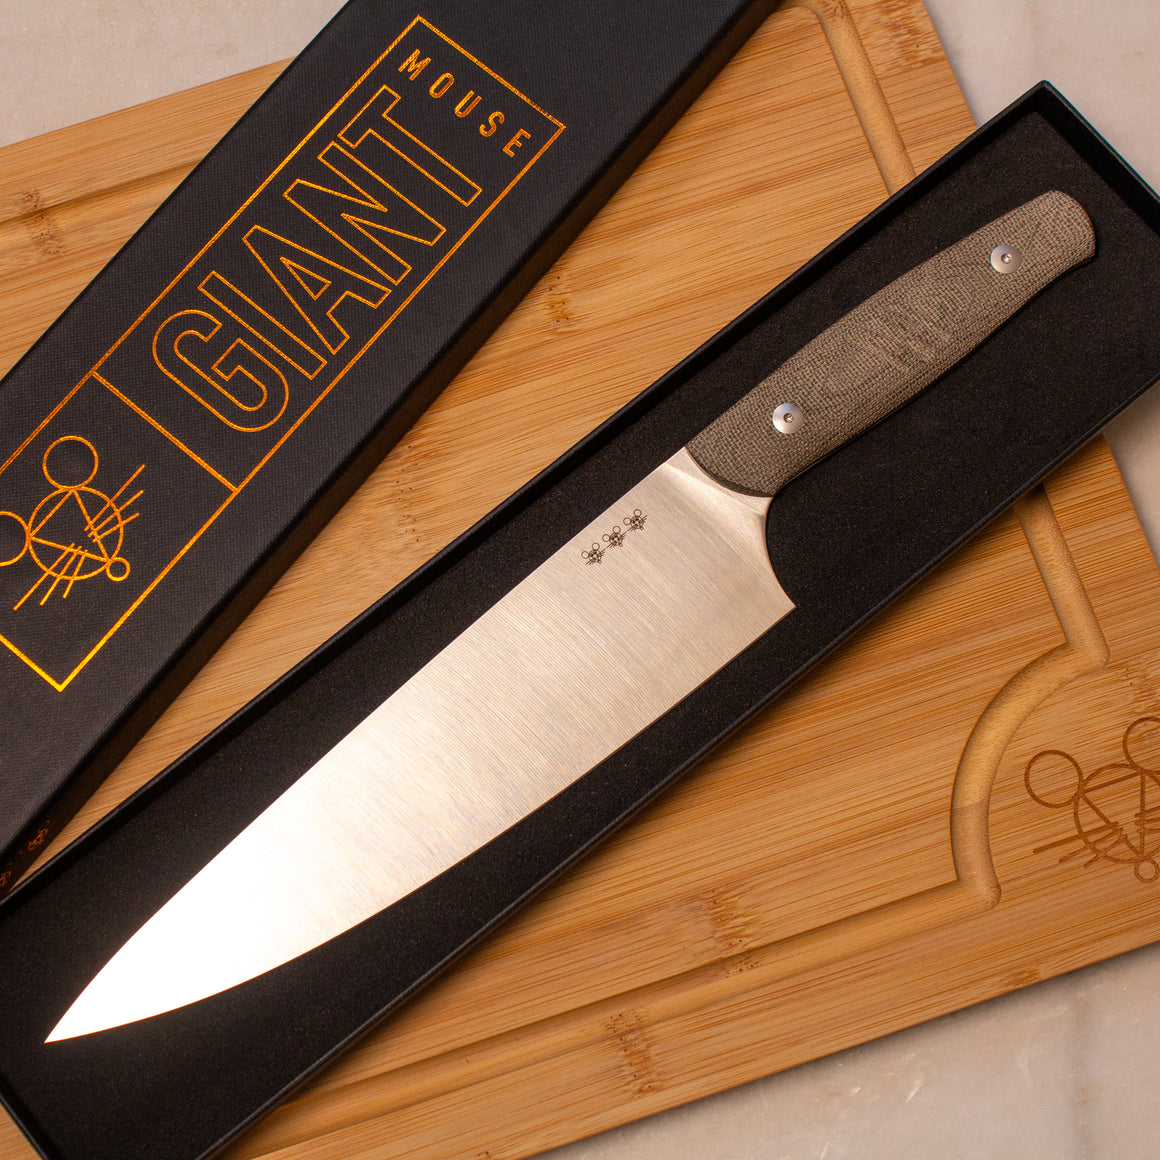 GiantMouse Chef Knife